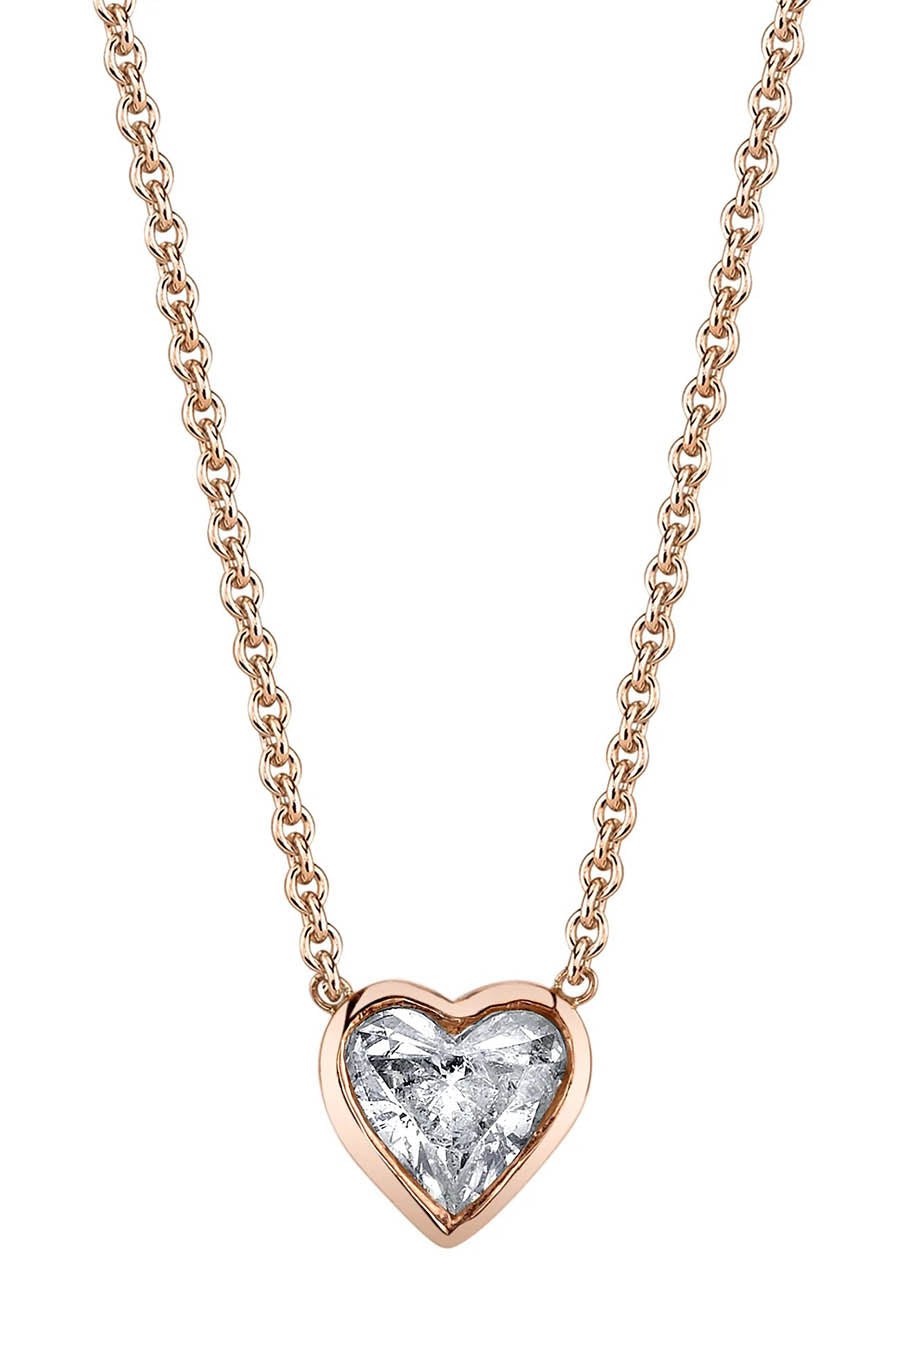 SHAY JEWELRY-Diamond Bezel Heart Necklace-ROSE GOLD